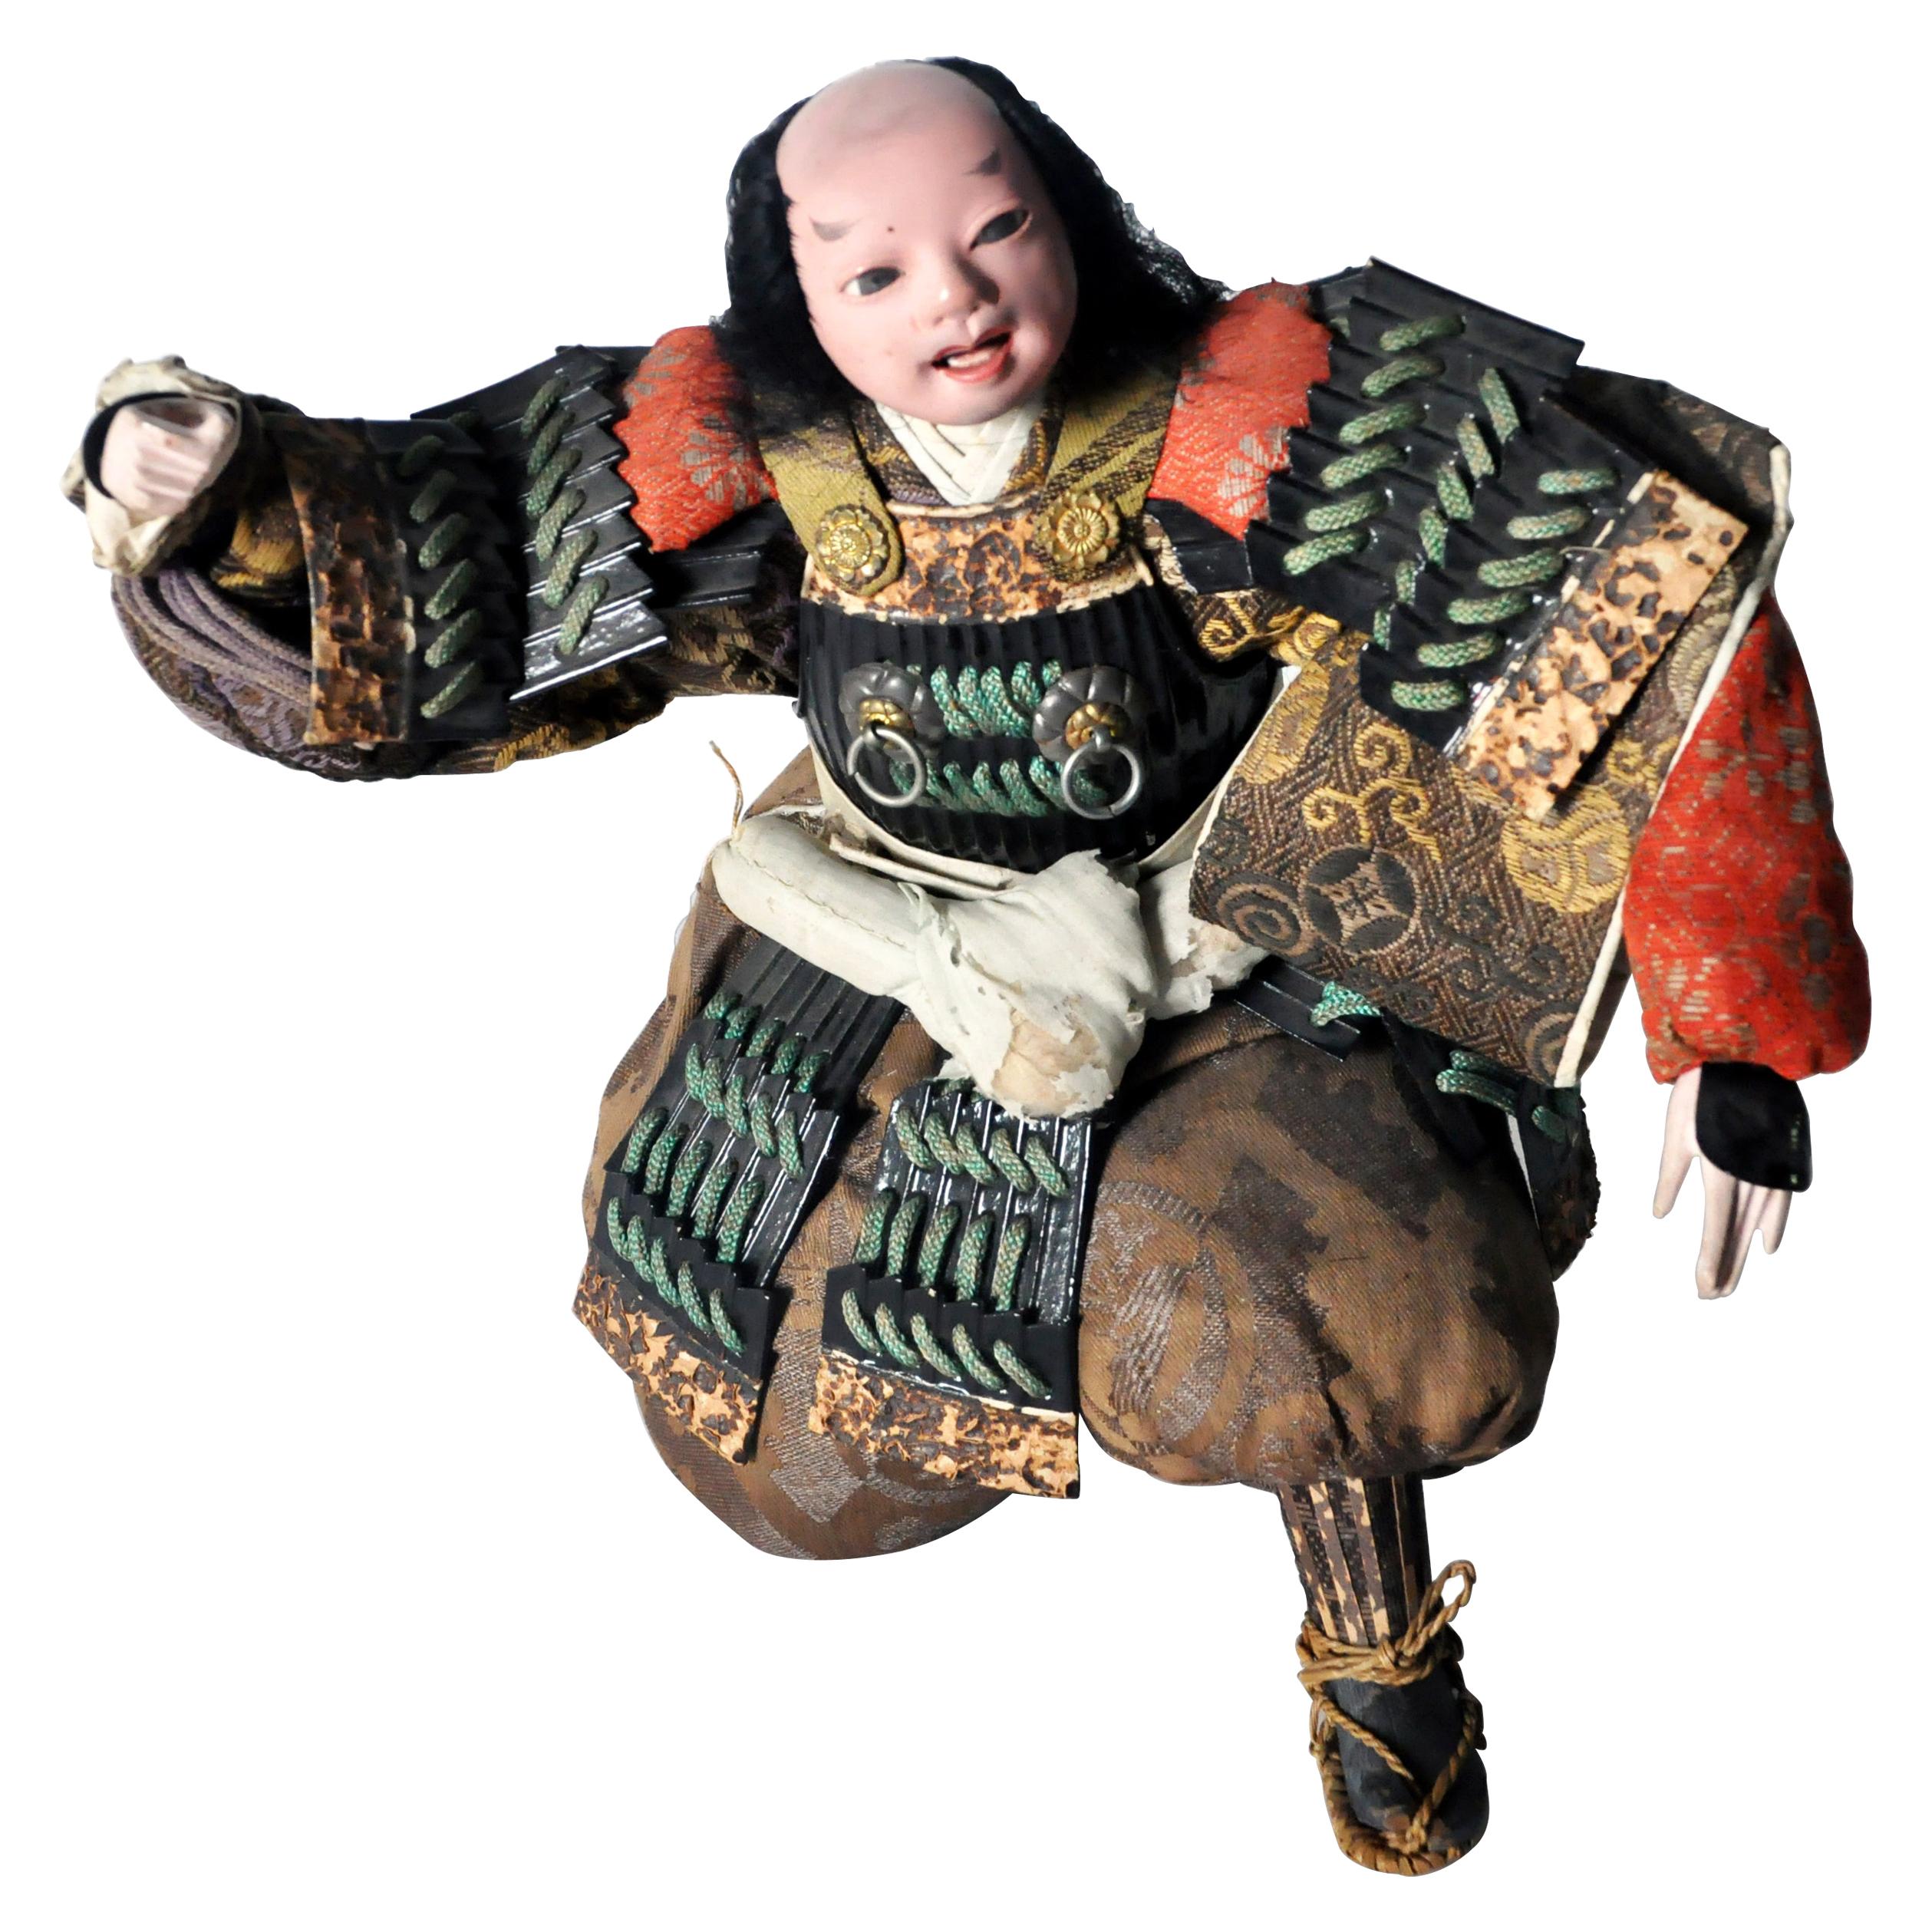 Musha Samurai Warrior Figure, circa 1850